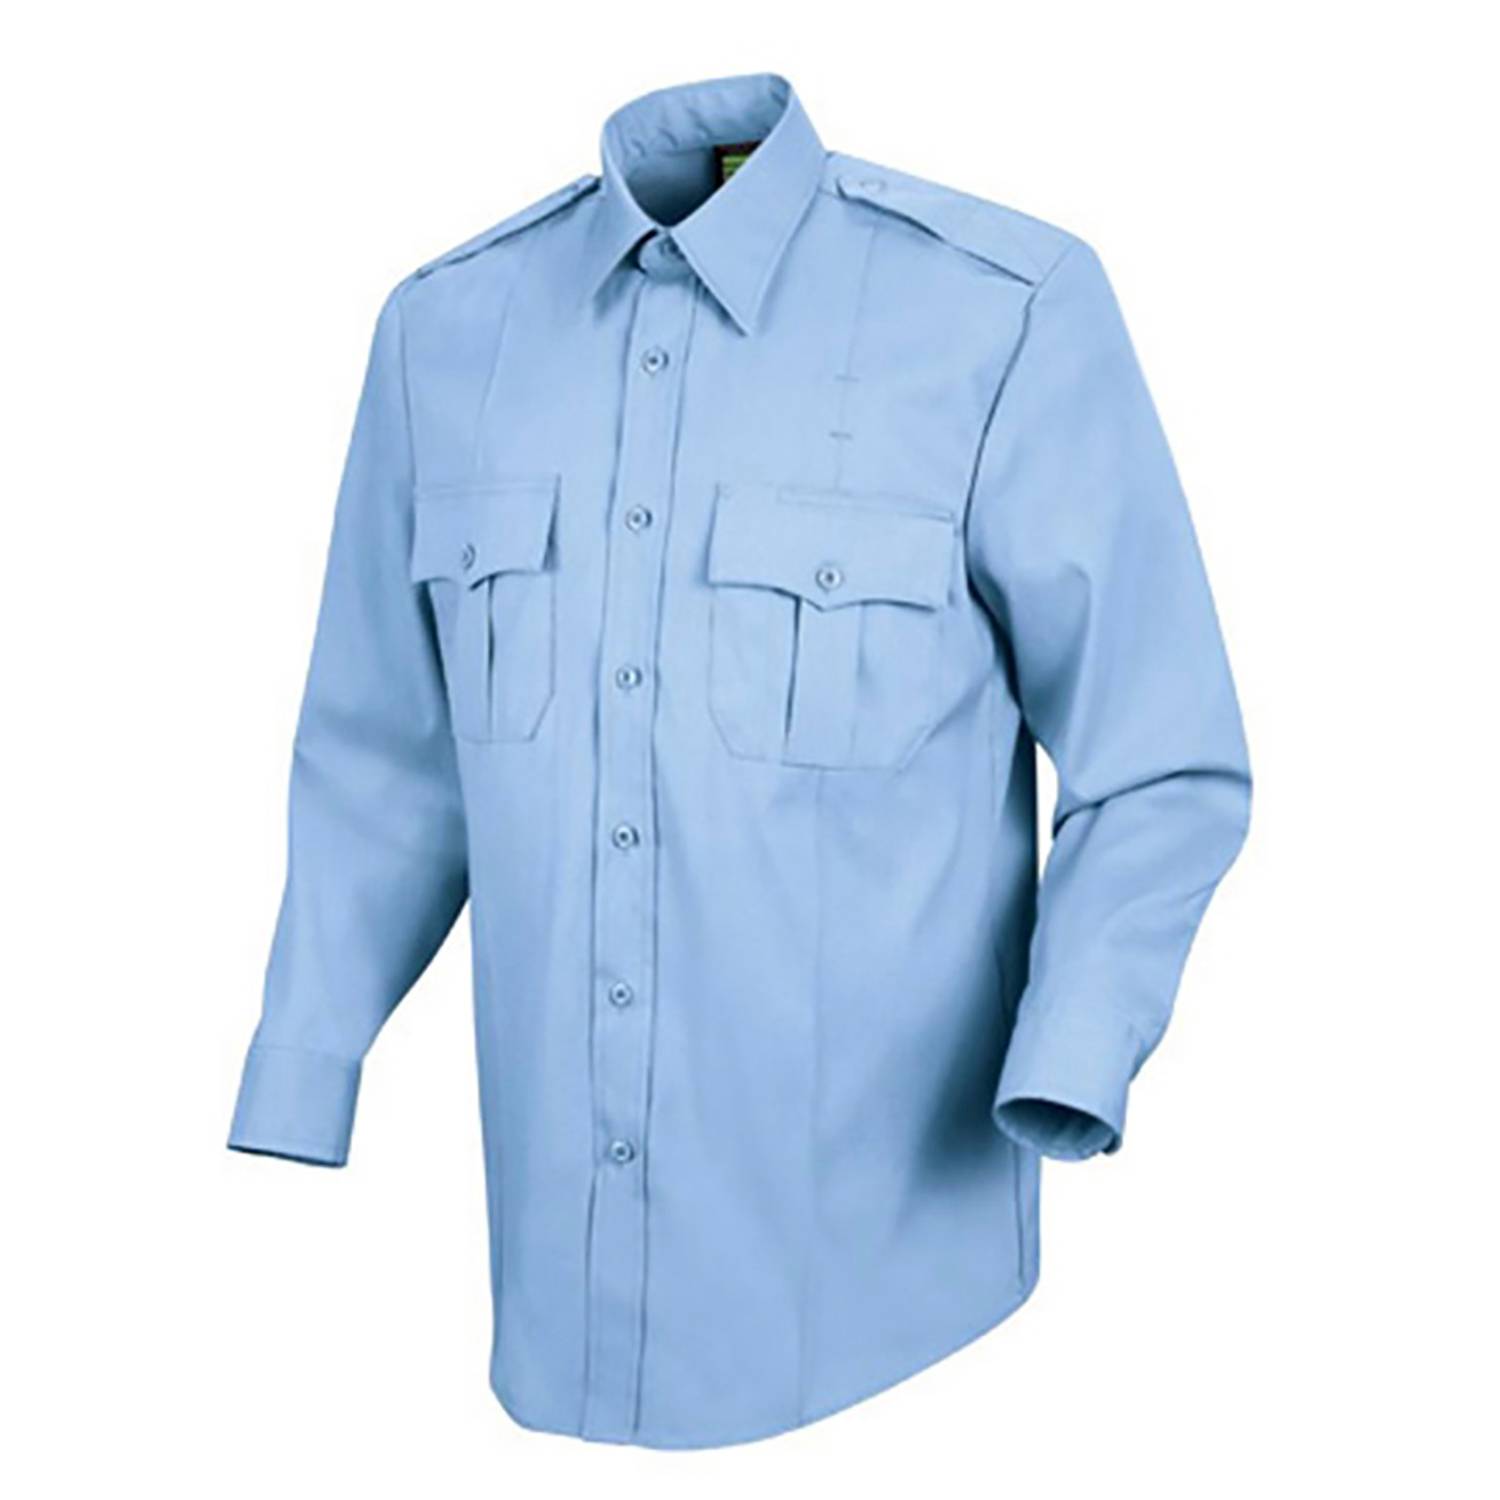 Southeastern Shirt Code 3 Uniform Shirt